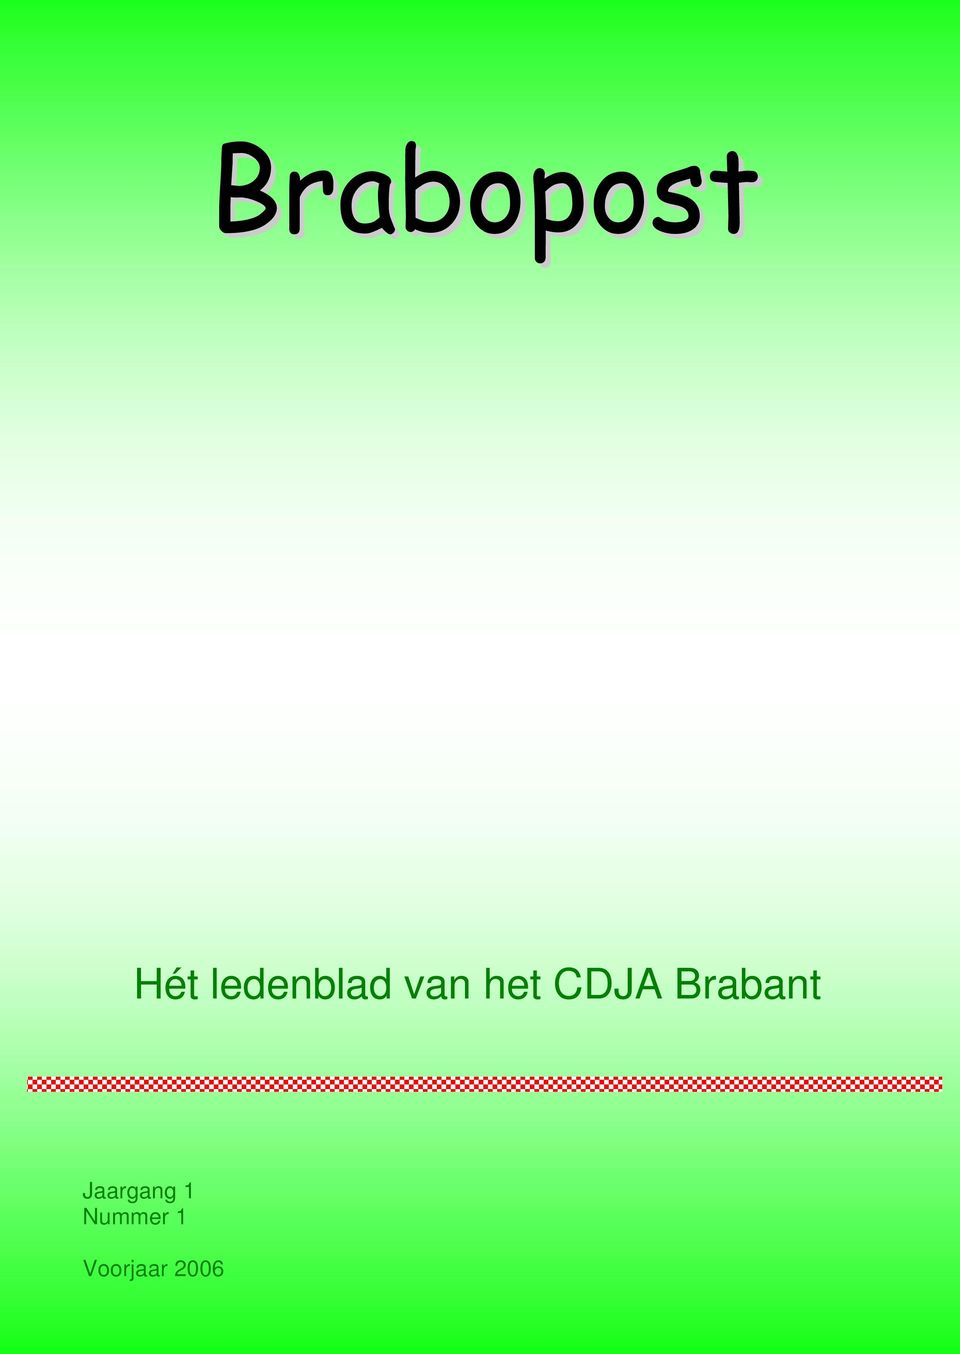 CDJA Brabant